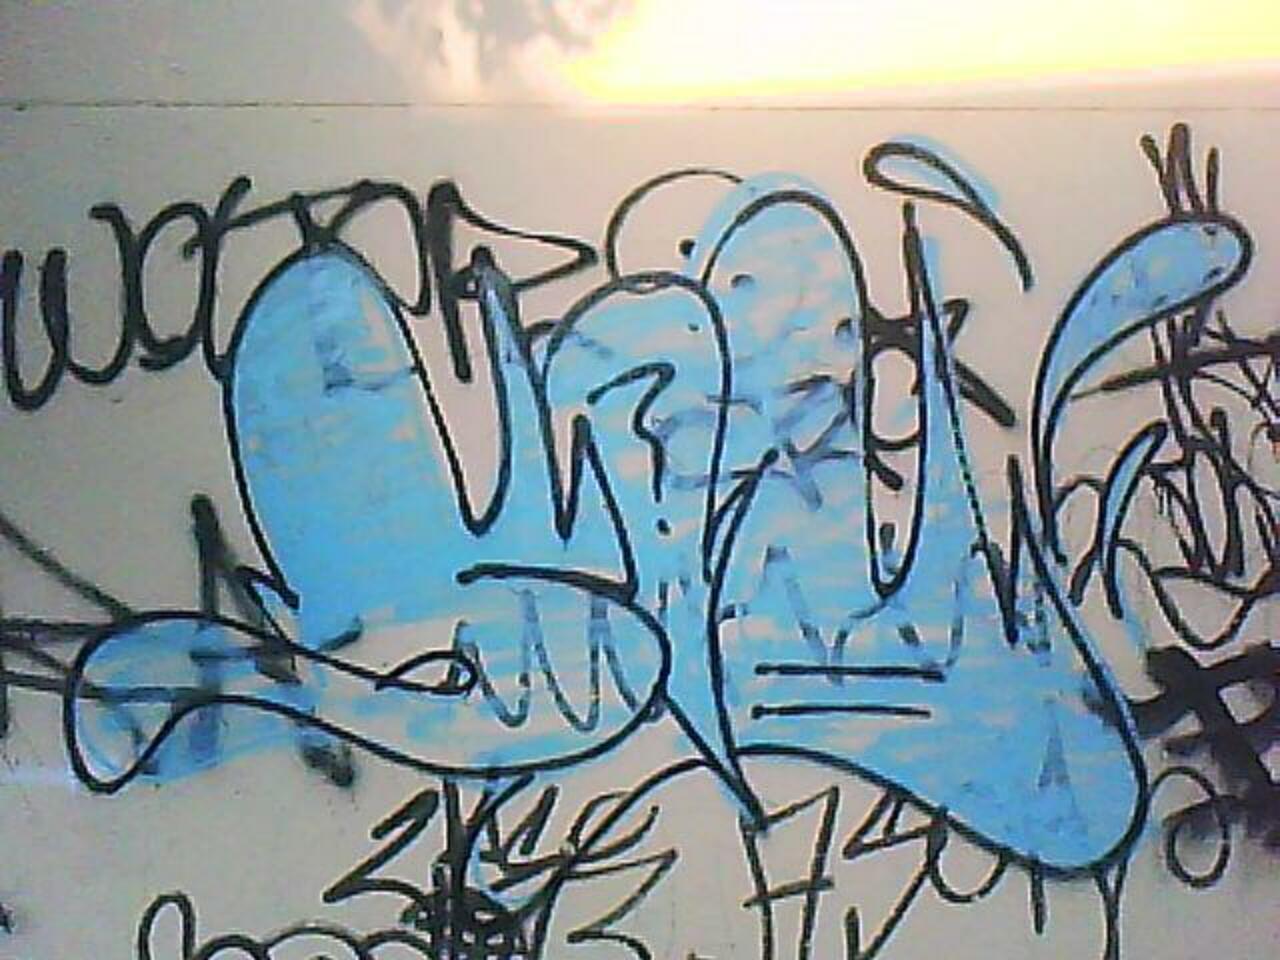 #Soder #Graffiti #2EK #StreetArt #LaComarca #GomezPalacioDurango #LaLaguna #HipHop #FatCap #MtnColors #ilegalSquad http://t.co/XBH5Xgct2A